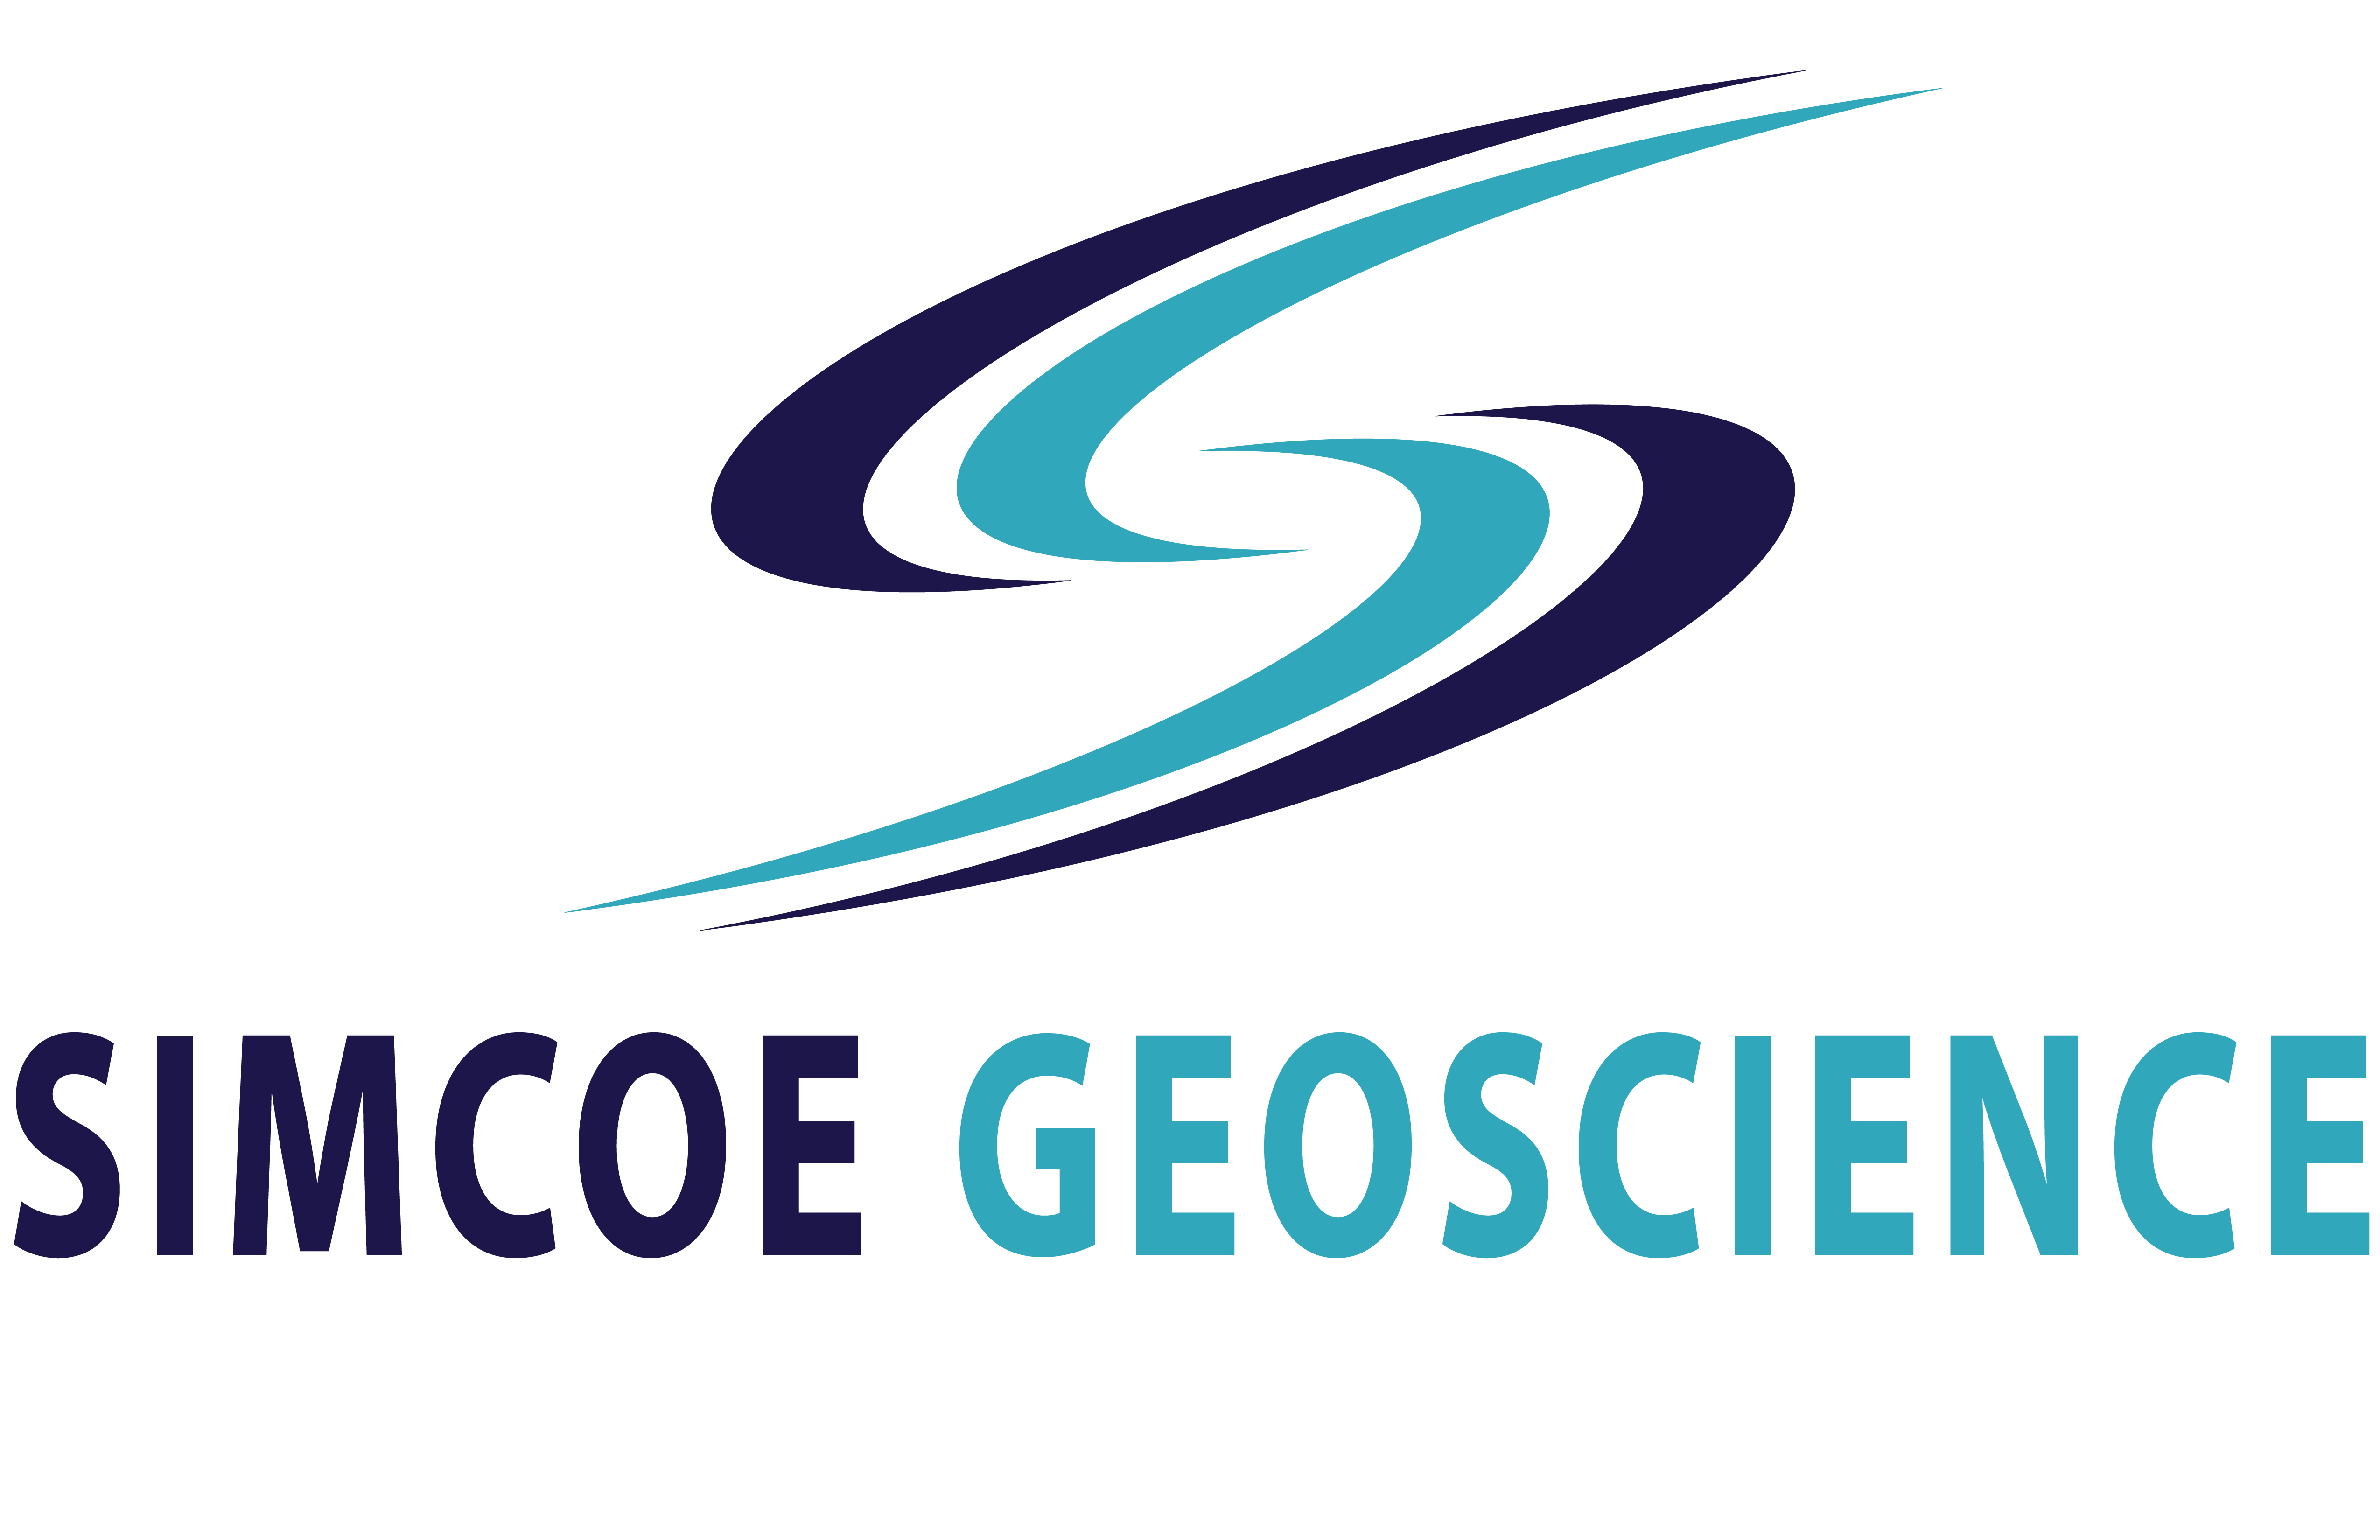 Simcoe Geoscience